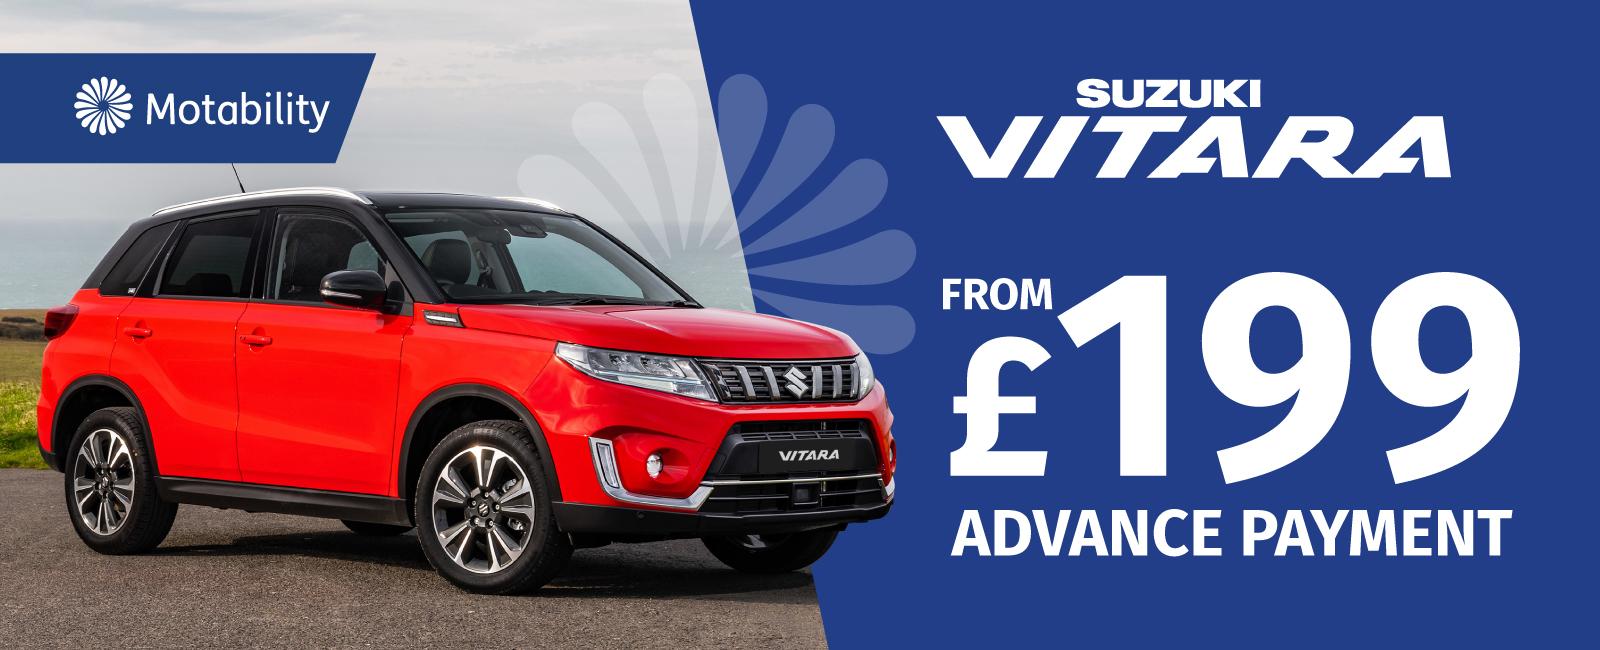 The Suzuki Vitara on the Motability Scheme from £199 Advance Payment